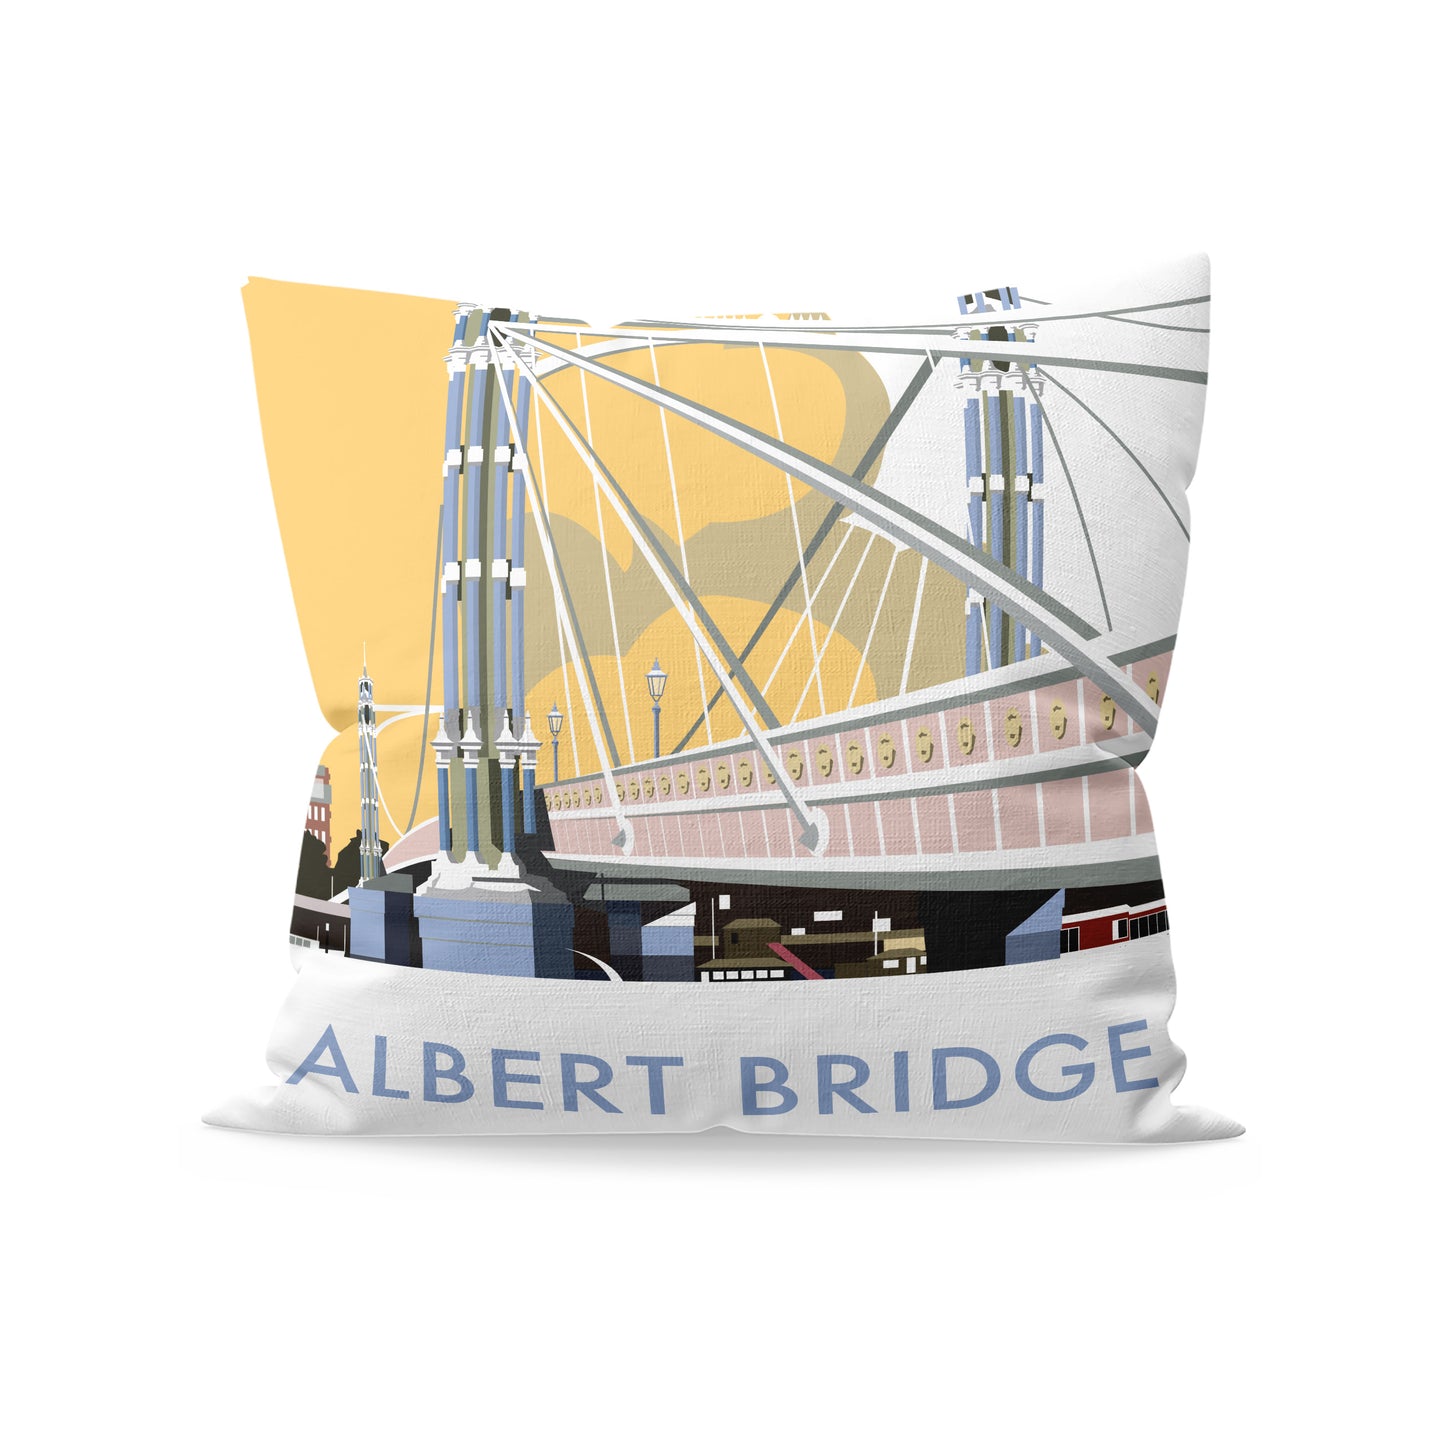 Albert Bridge Cushion